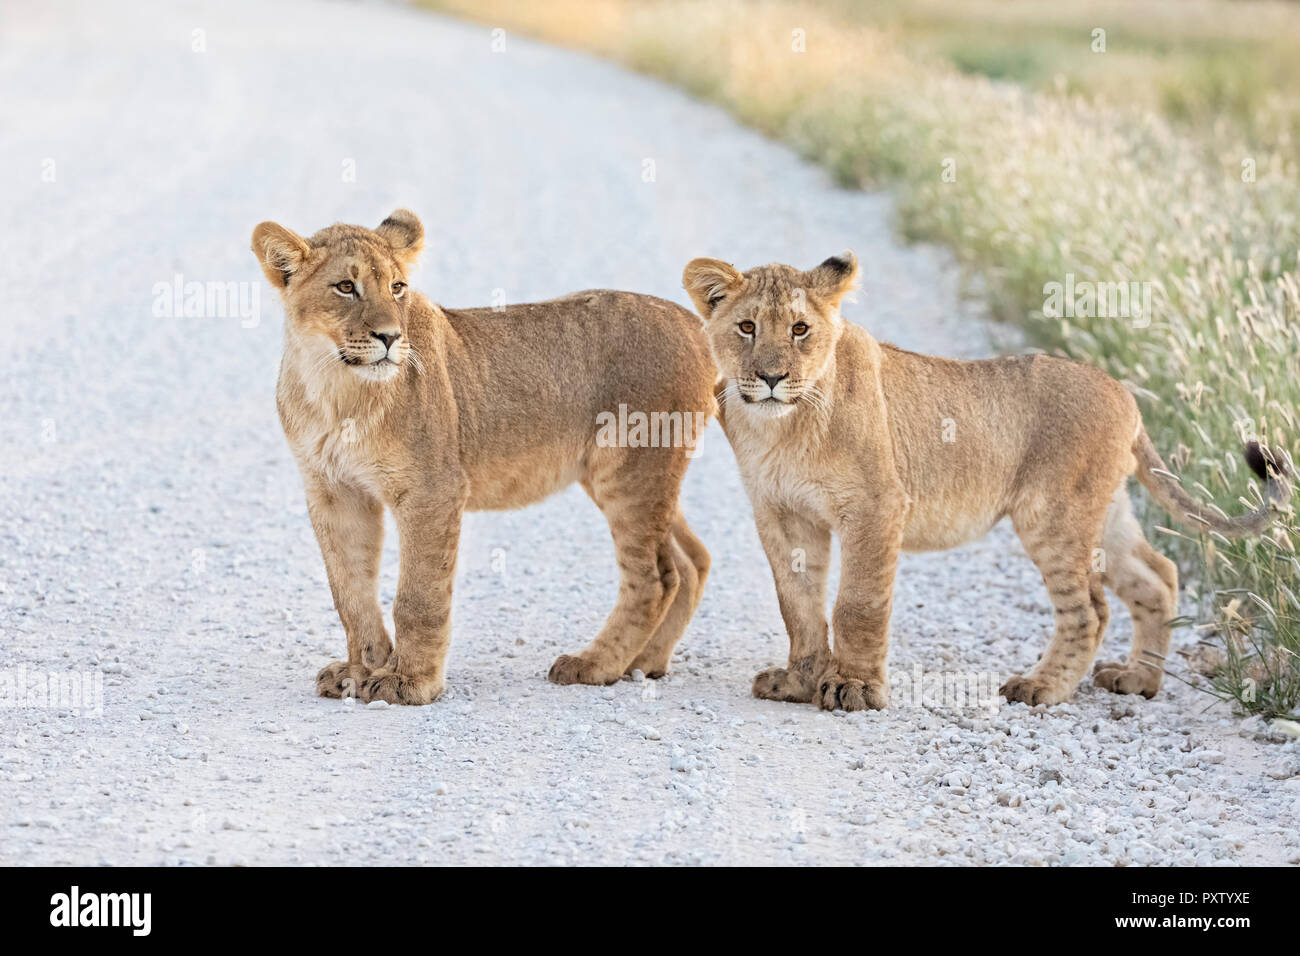 Botswana, Kgalagadi Transfrontier Park, junge Löwen, Panthera leo, stehend auf Feldweg Stockfoto